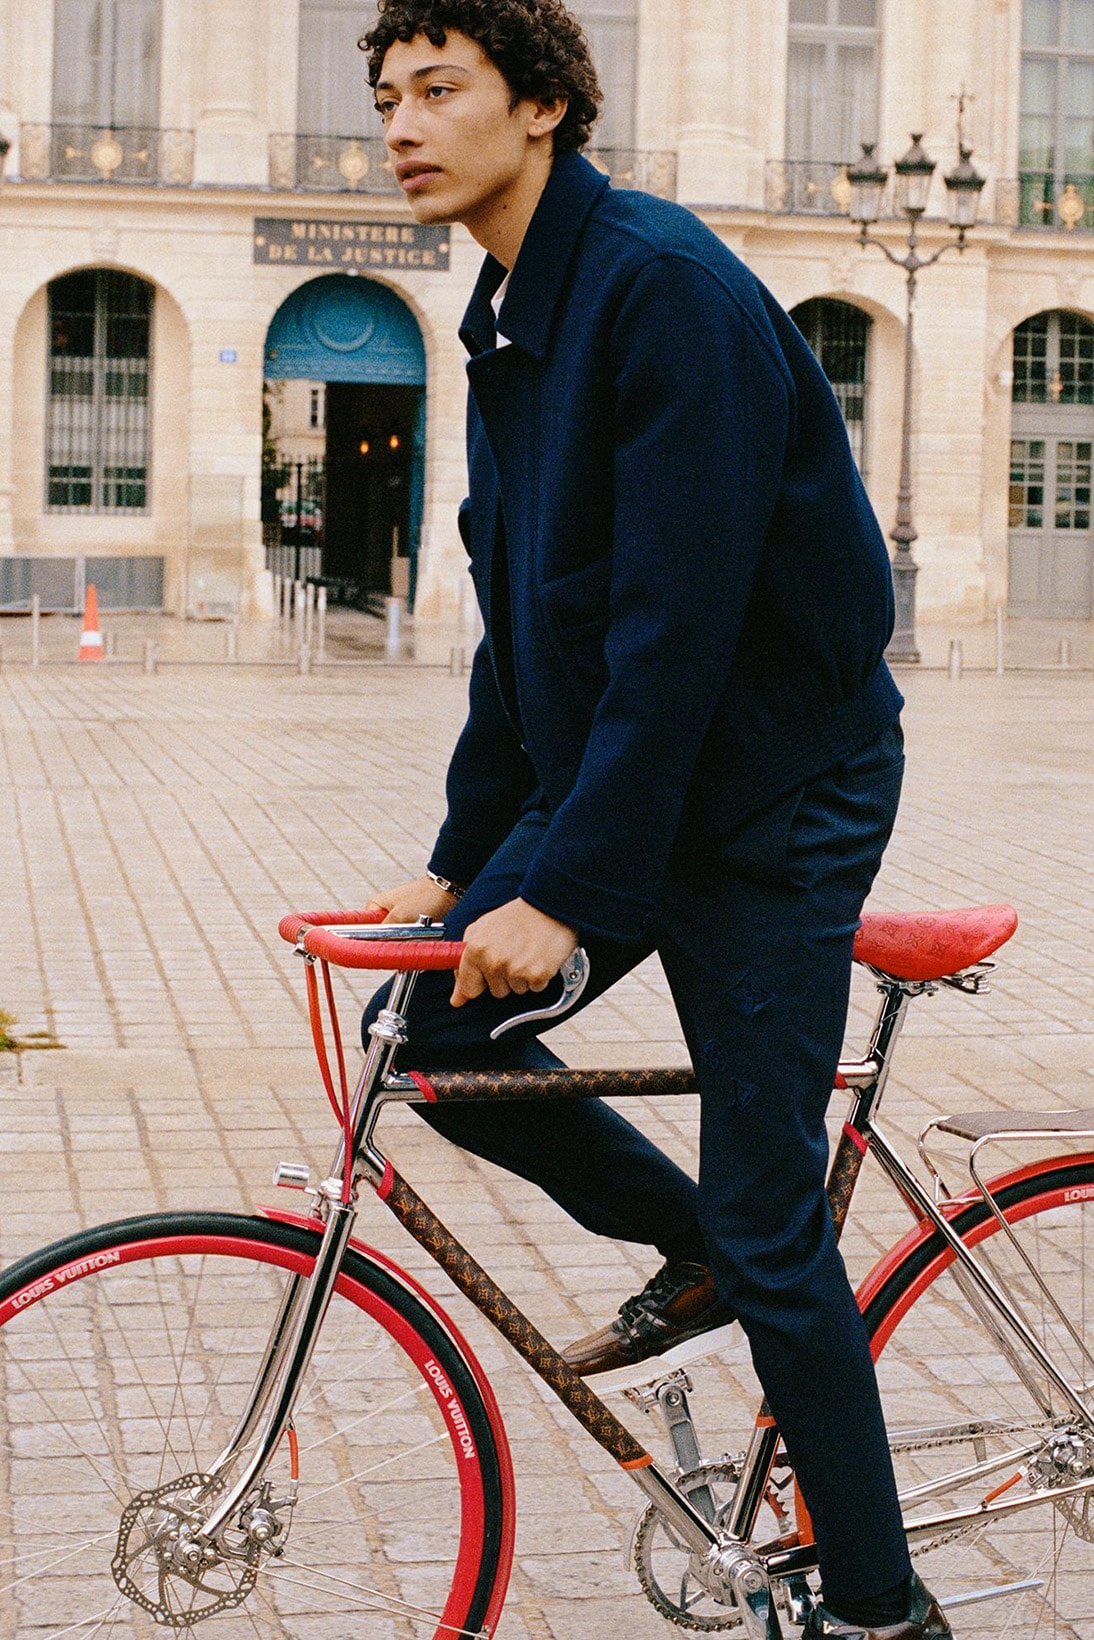 louis vuitton tamboite bike bicycle collaboration red paris